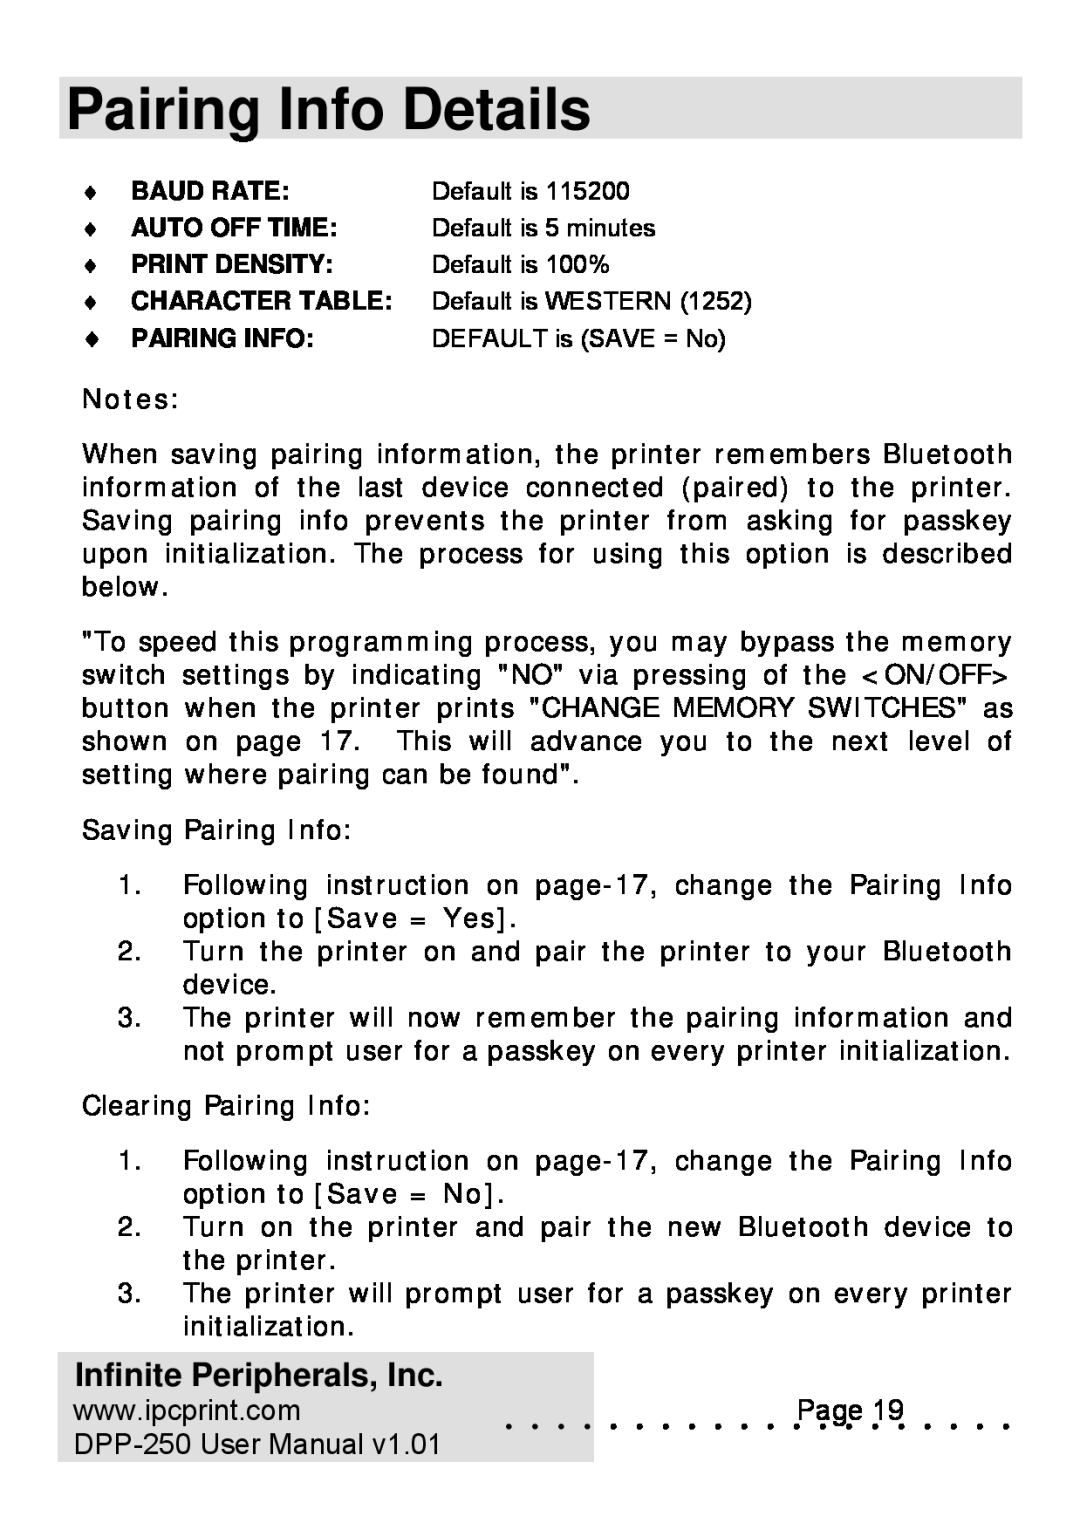 Infinite Peripherals user manual Pairing Info Details, Infinite Peripherals, Inc, DPP-250 User Manual 